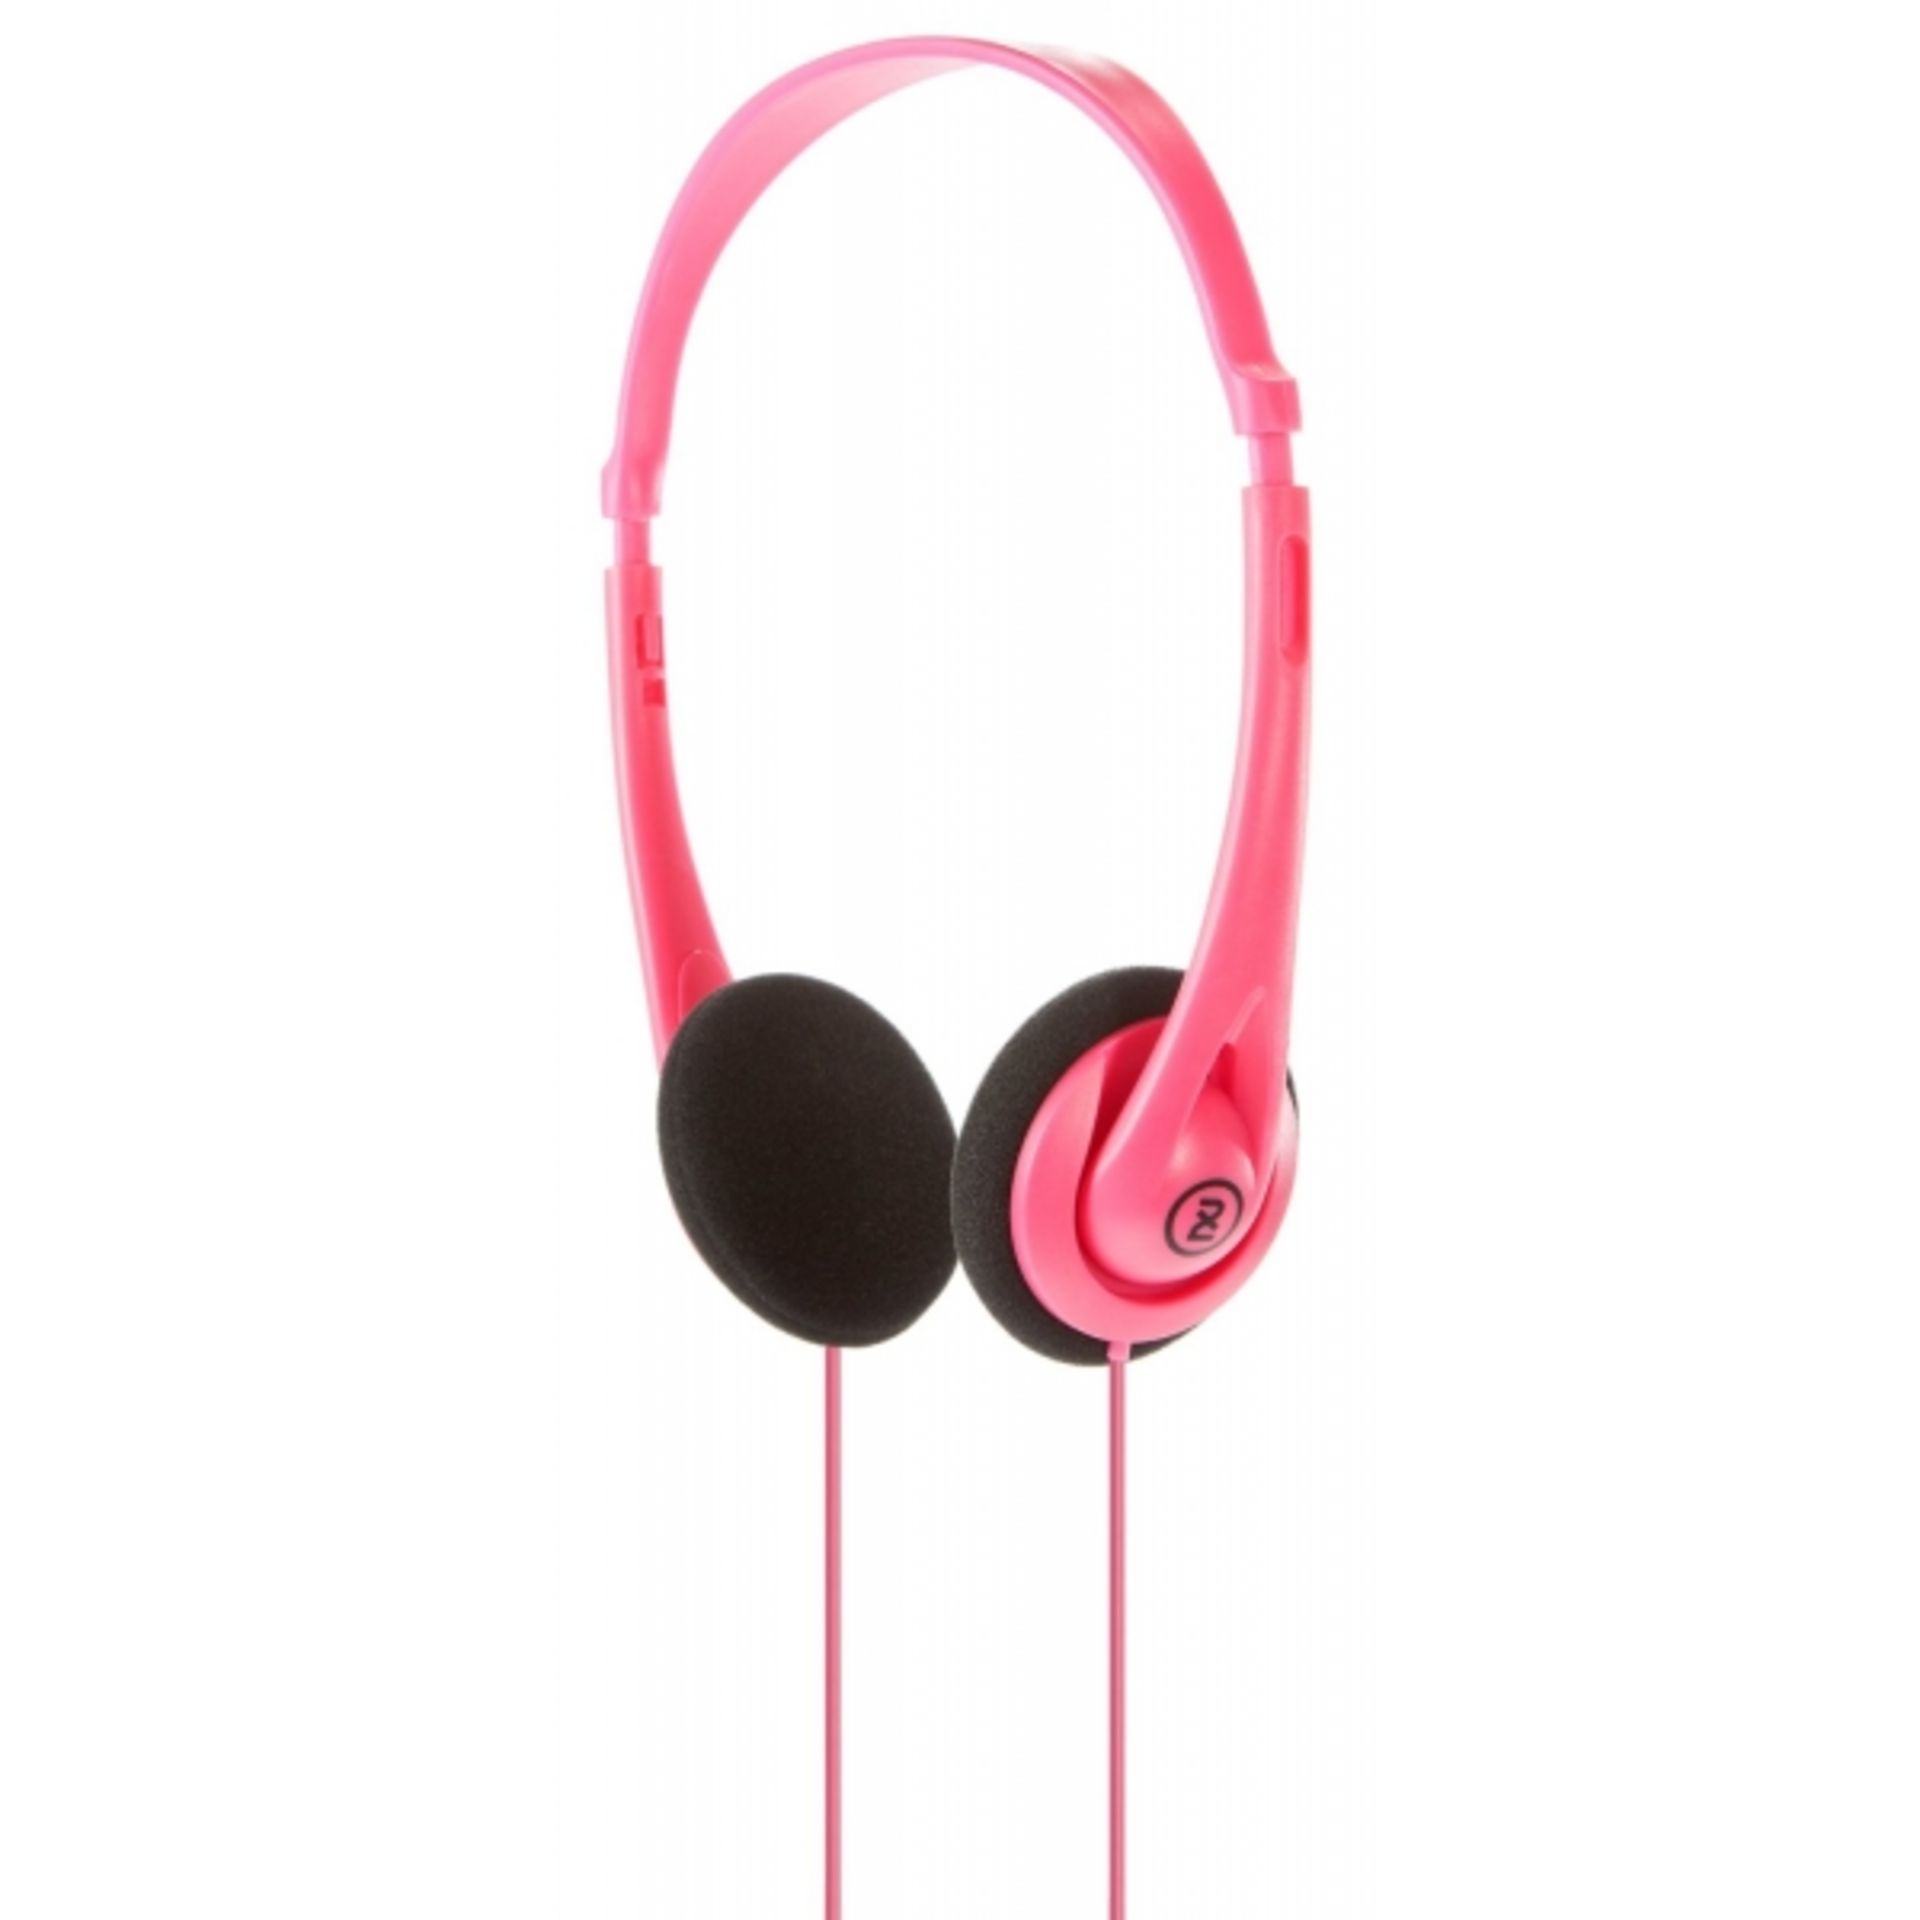 V *TRADE QTY* Brand New Skullcandy 2XL Wage Pink Headphones With Adjustable Headband X 4 YOUR BID